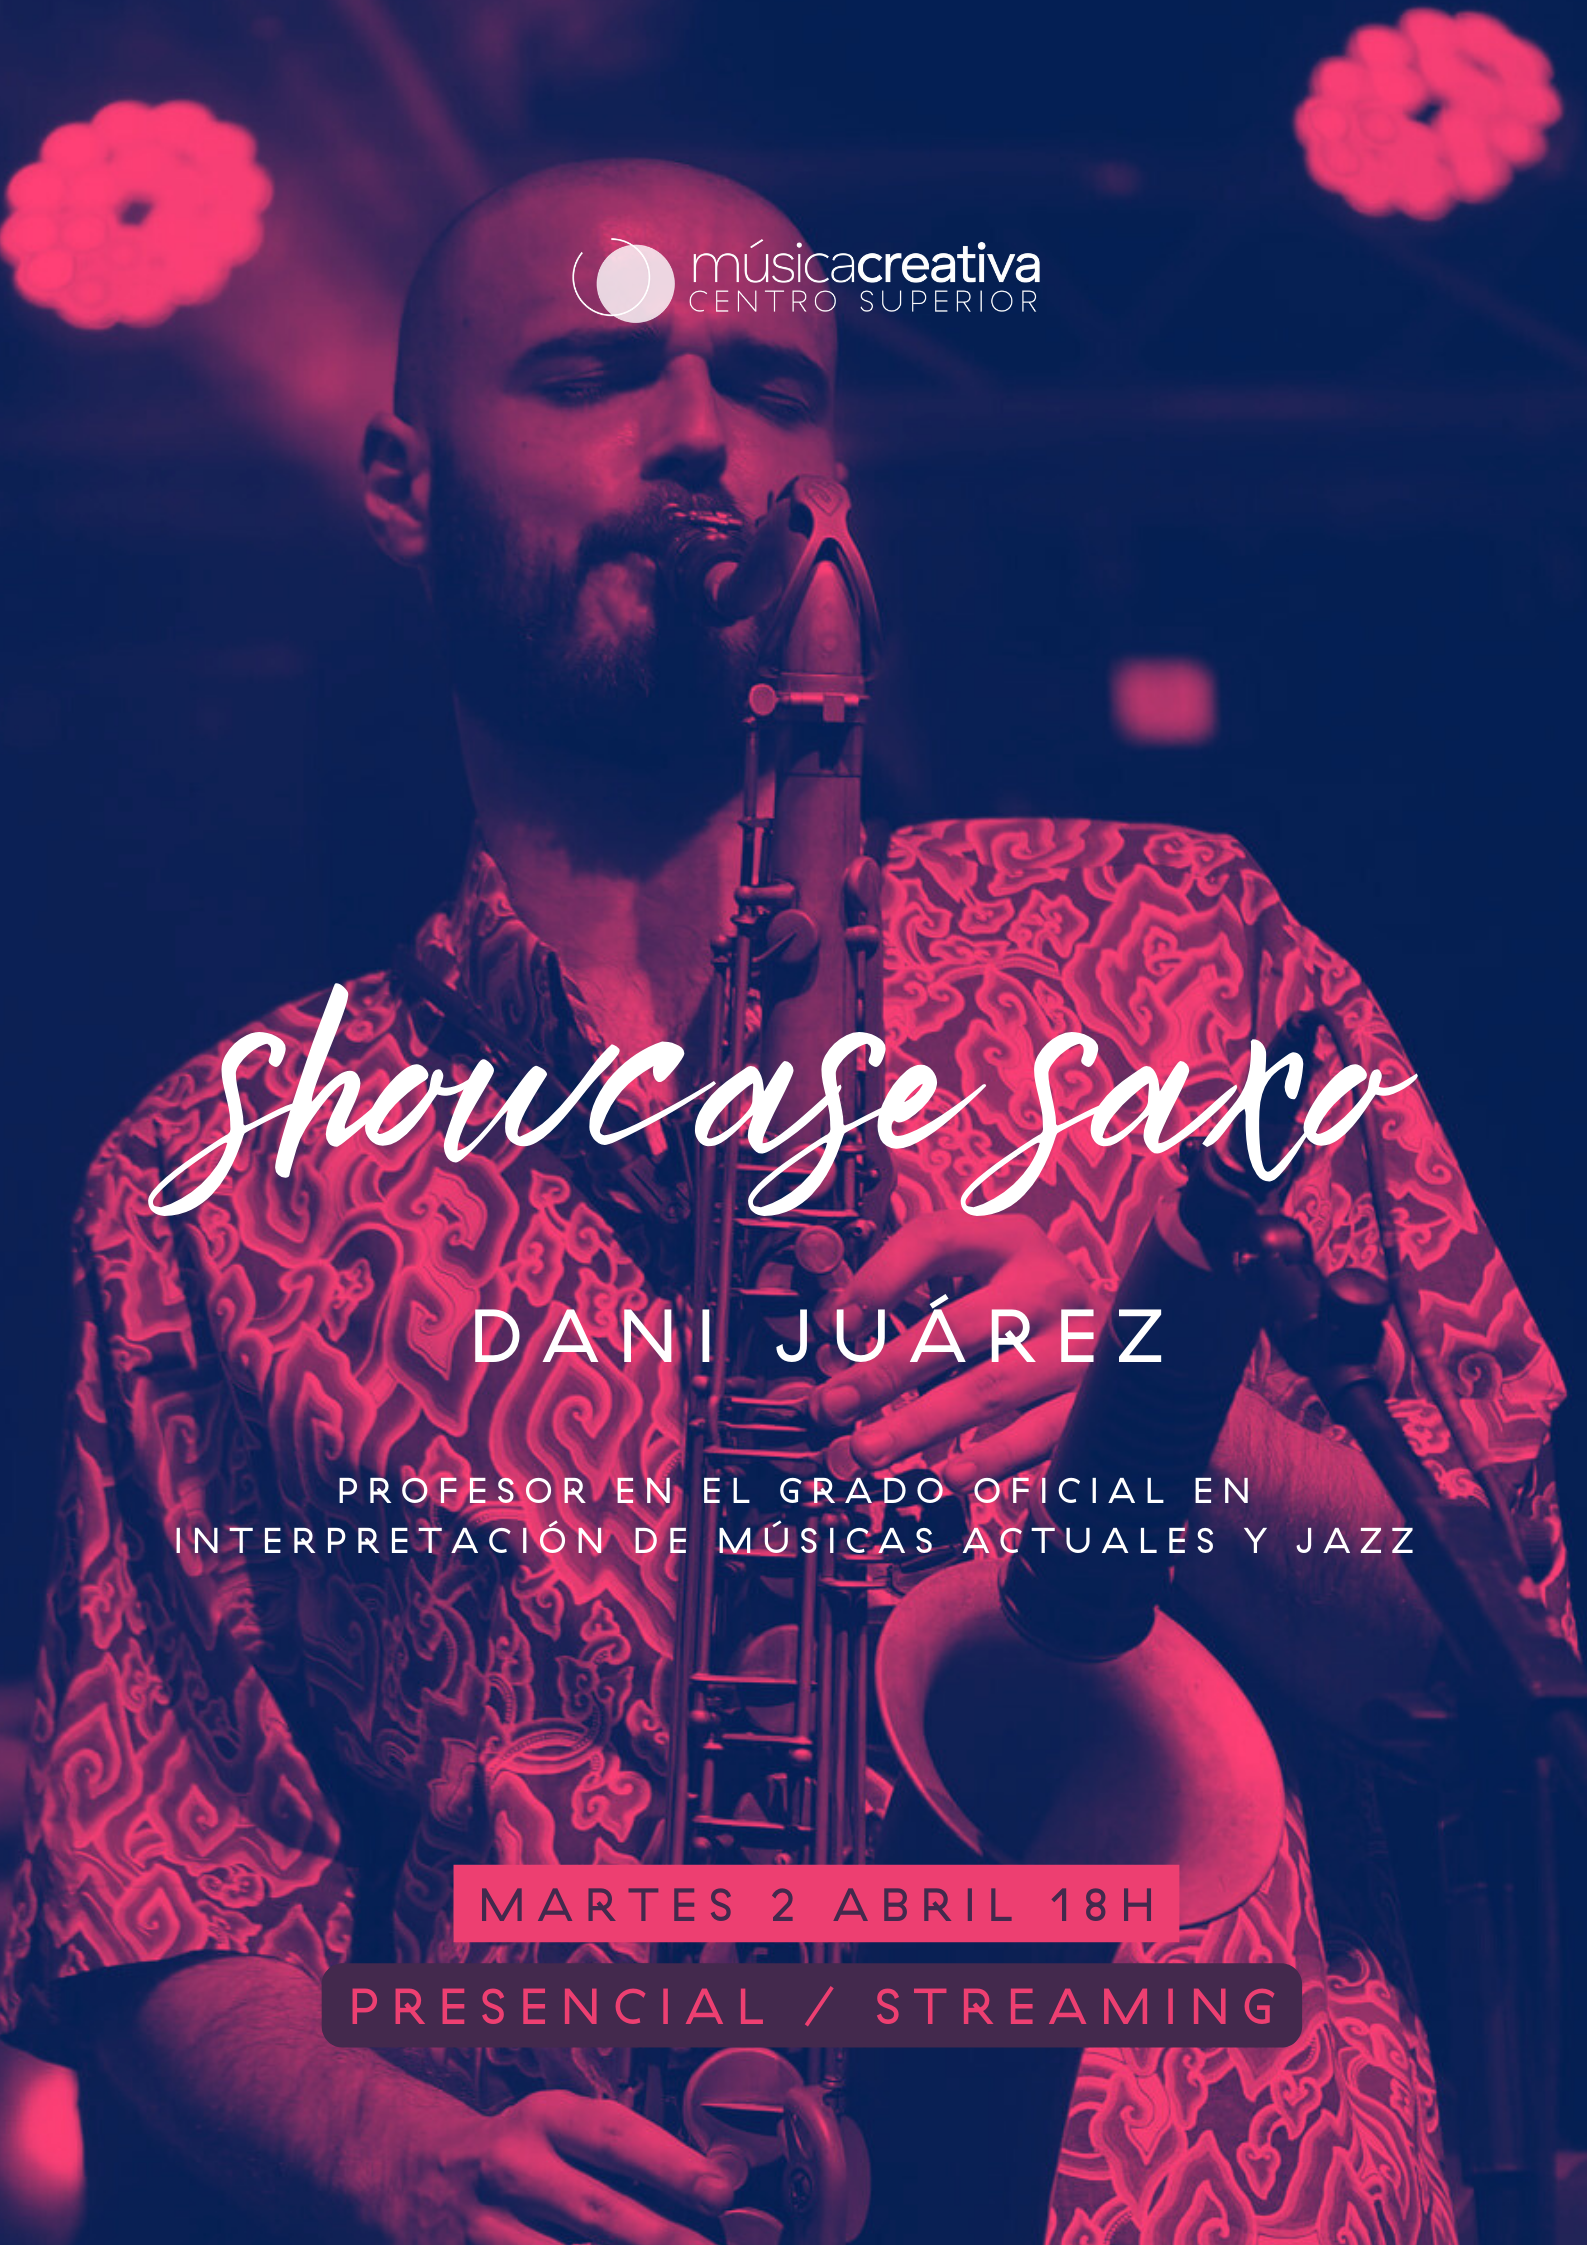 Showcase-Saxo-Dani-Juarez